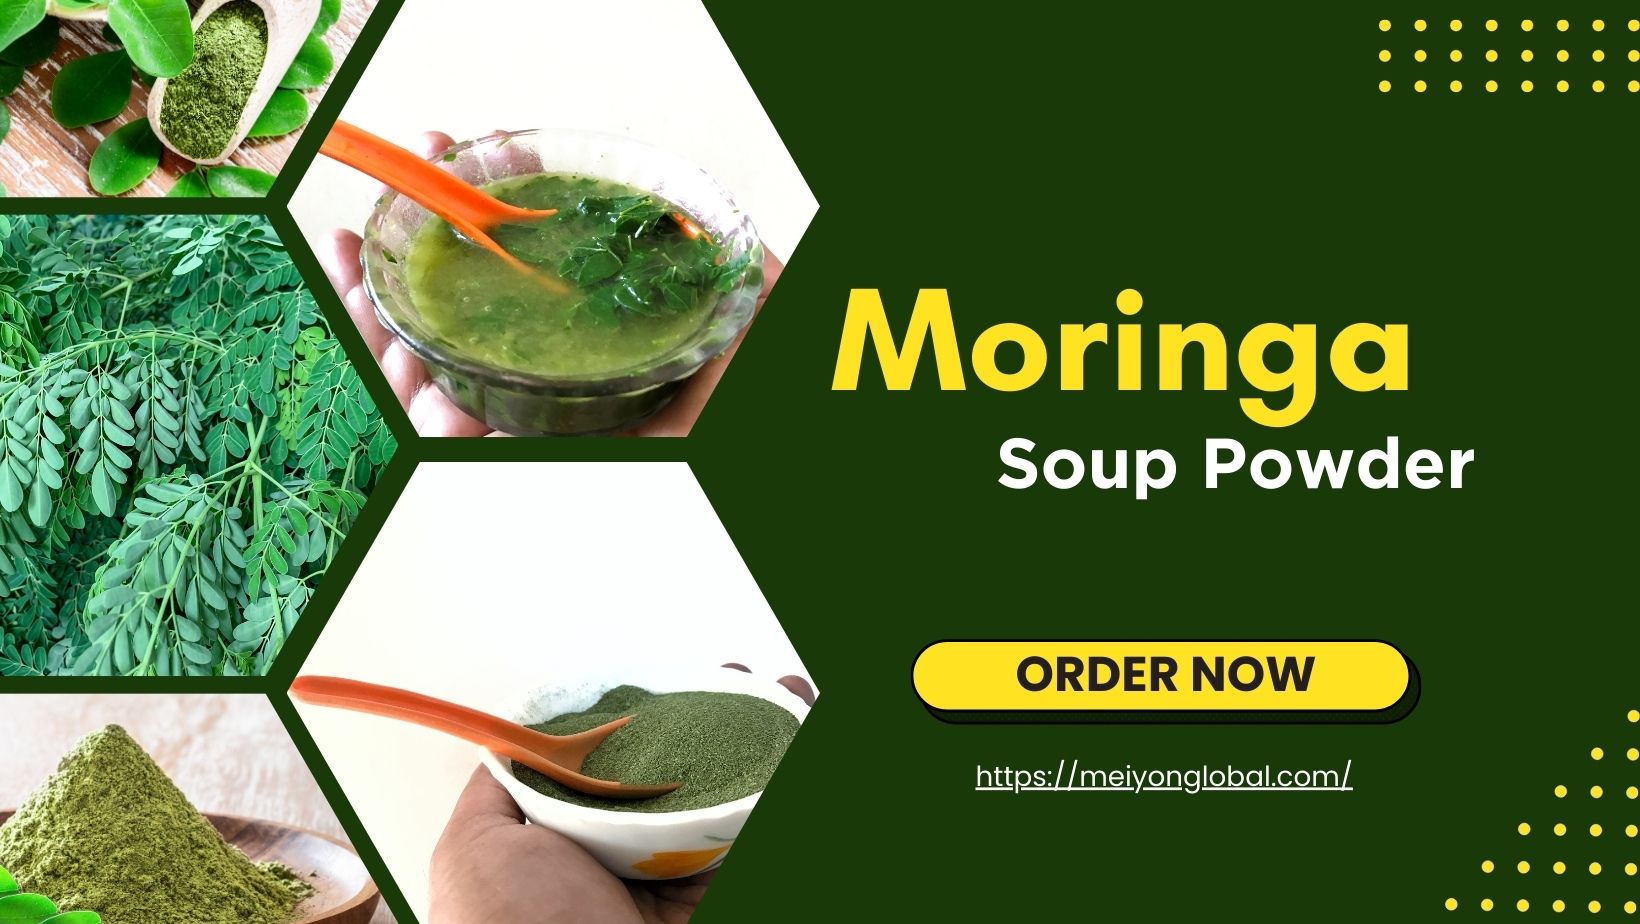 Moringa soup powder